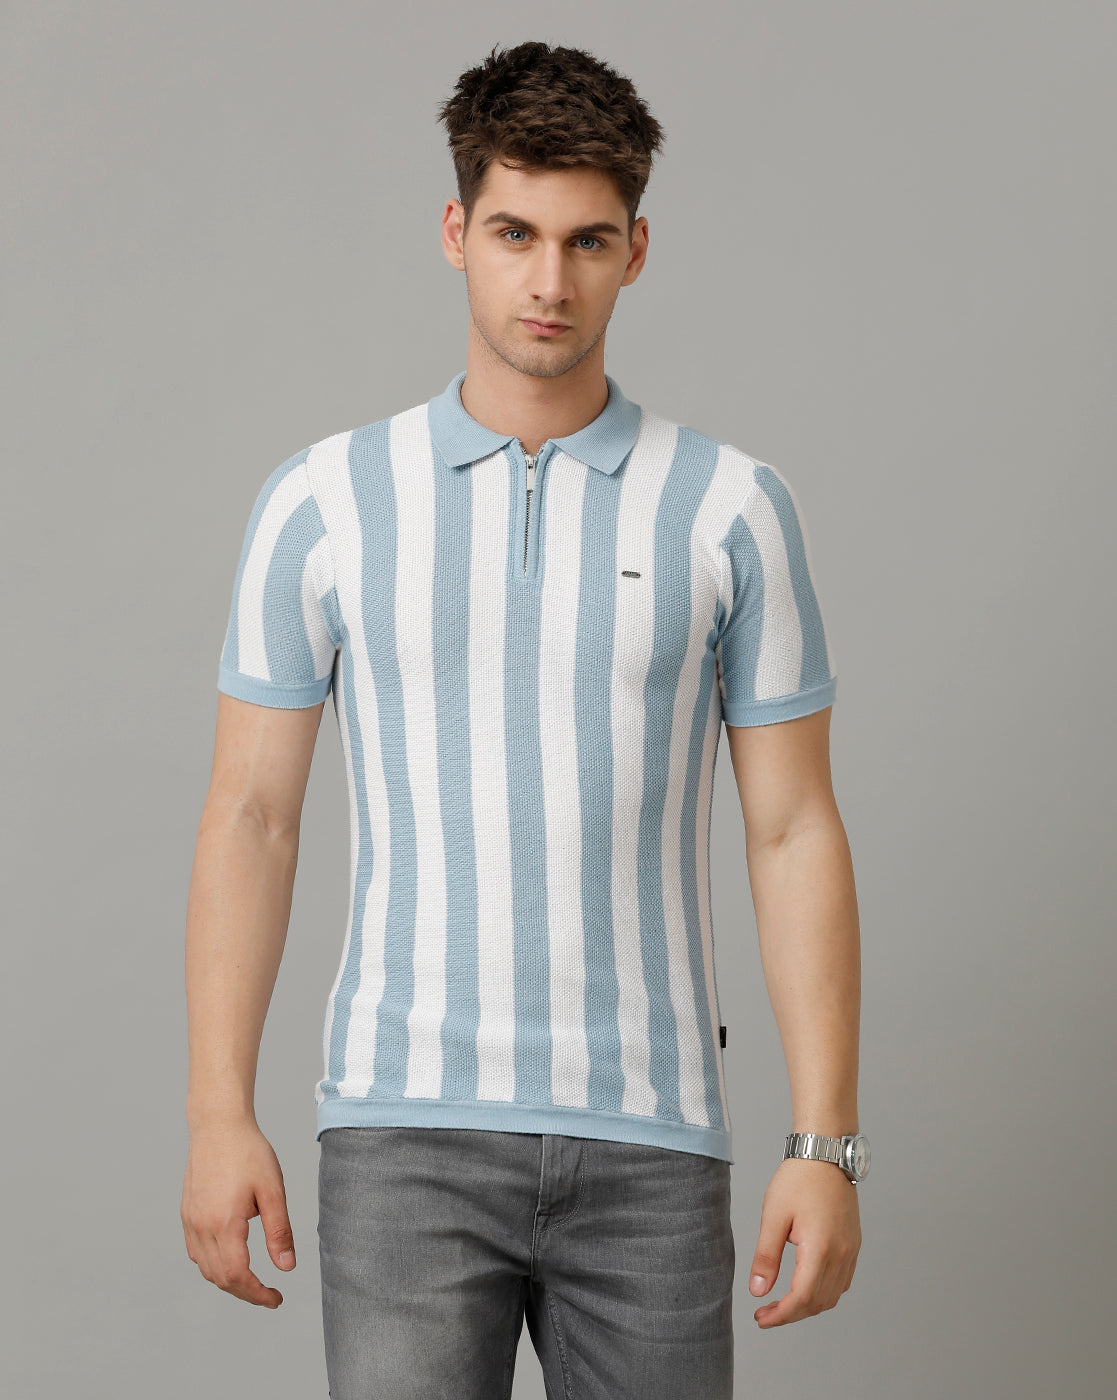 Identiti Powder blue Half Sleeve Striped Slim Fit Cotton Casual Polo T-Shirt For Men.